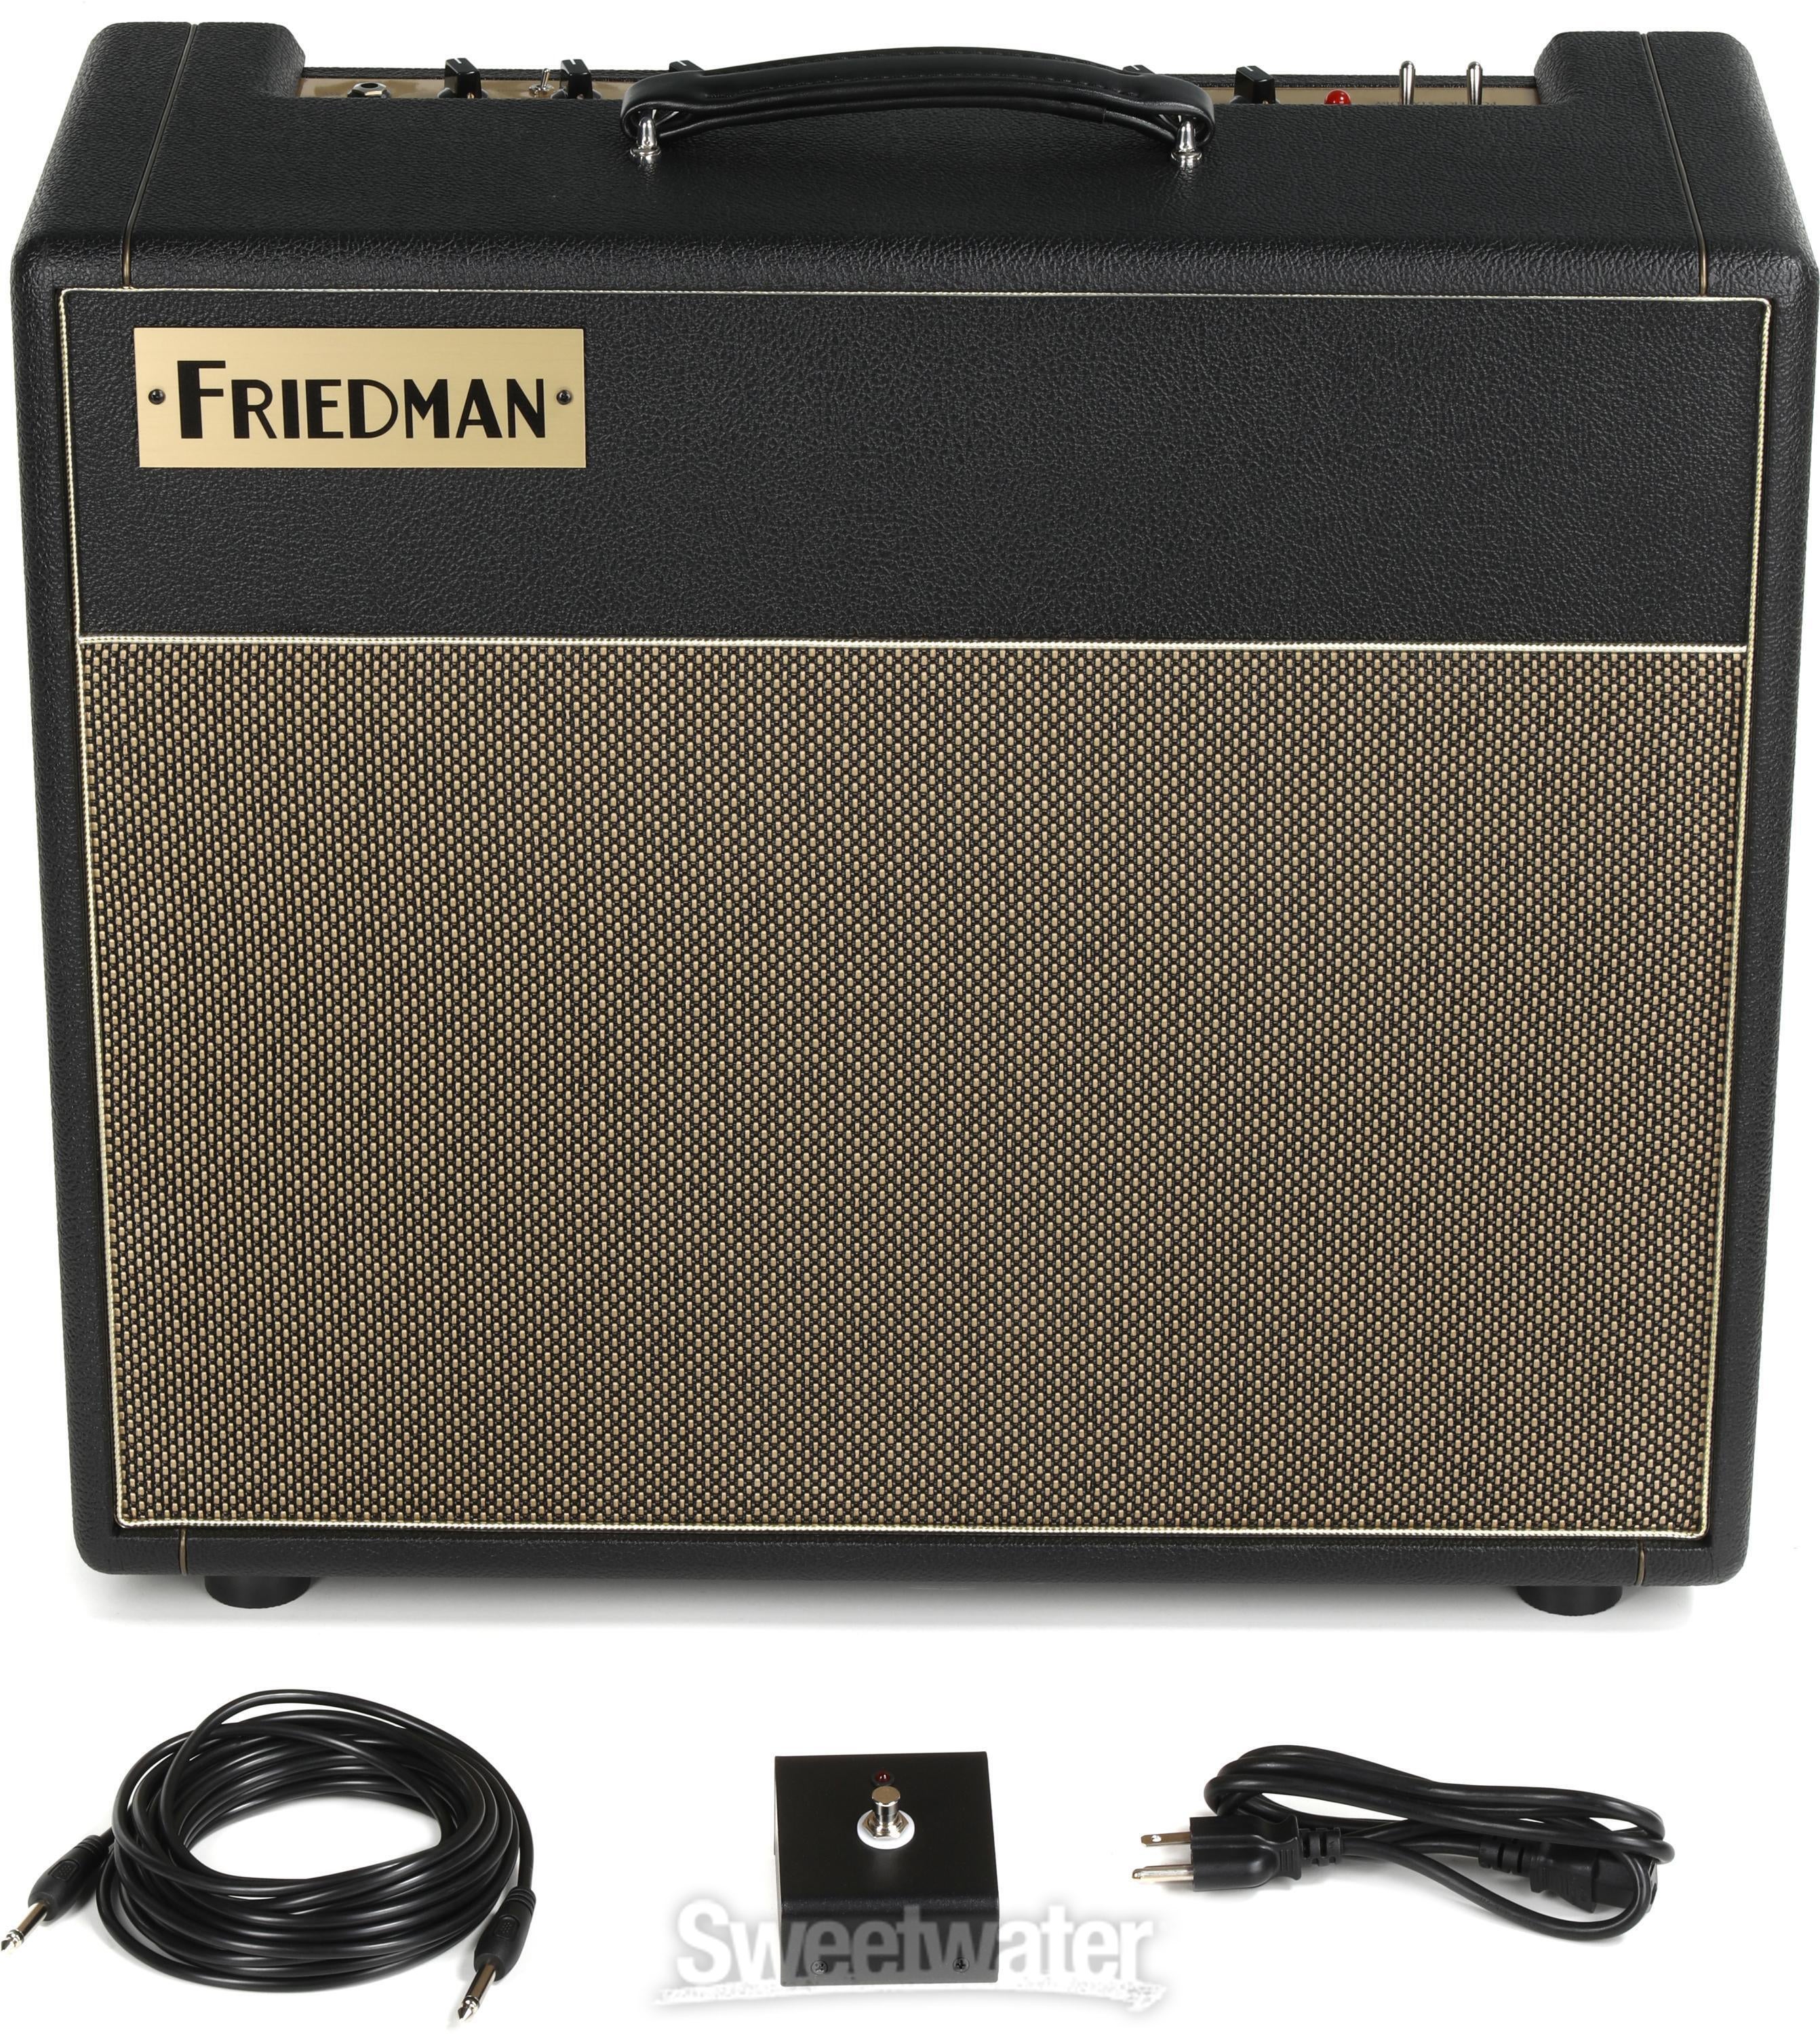 Friedman Small Box 1 x 12 inch 50-watt Tube Combo Amp